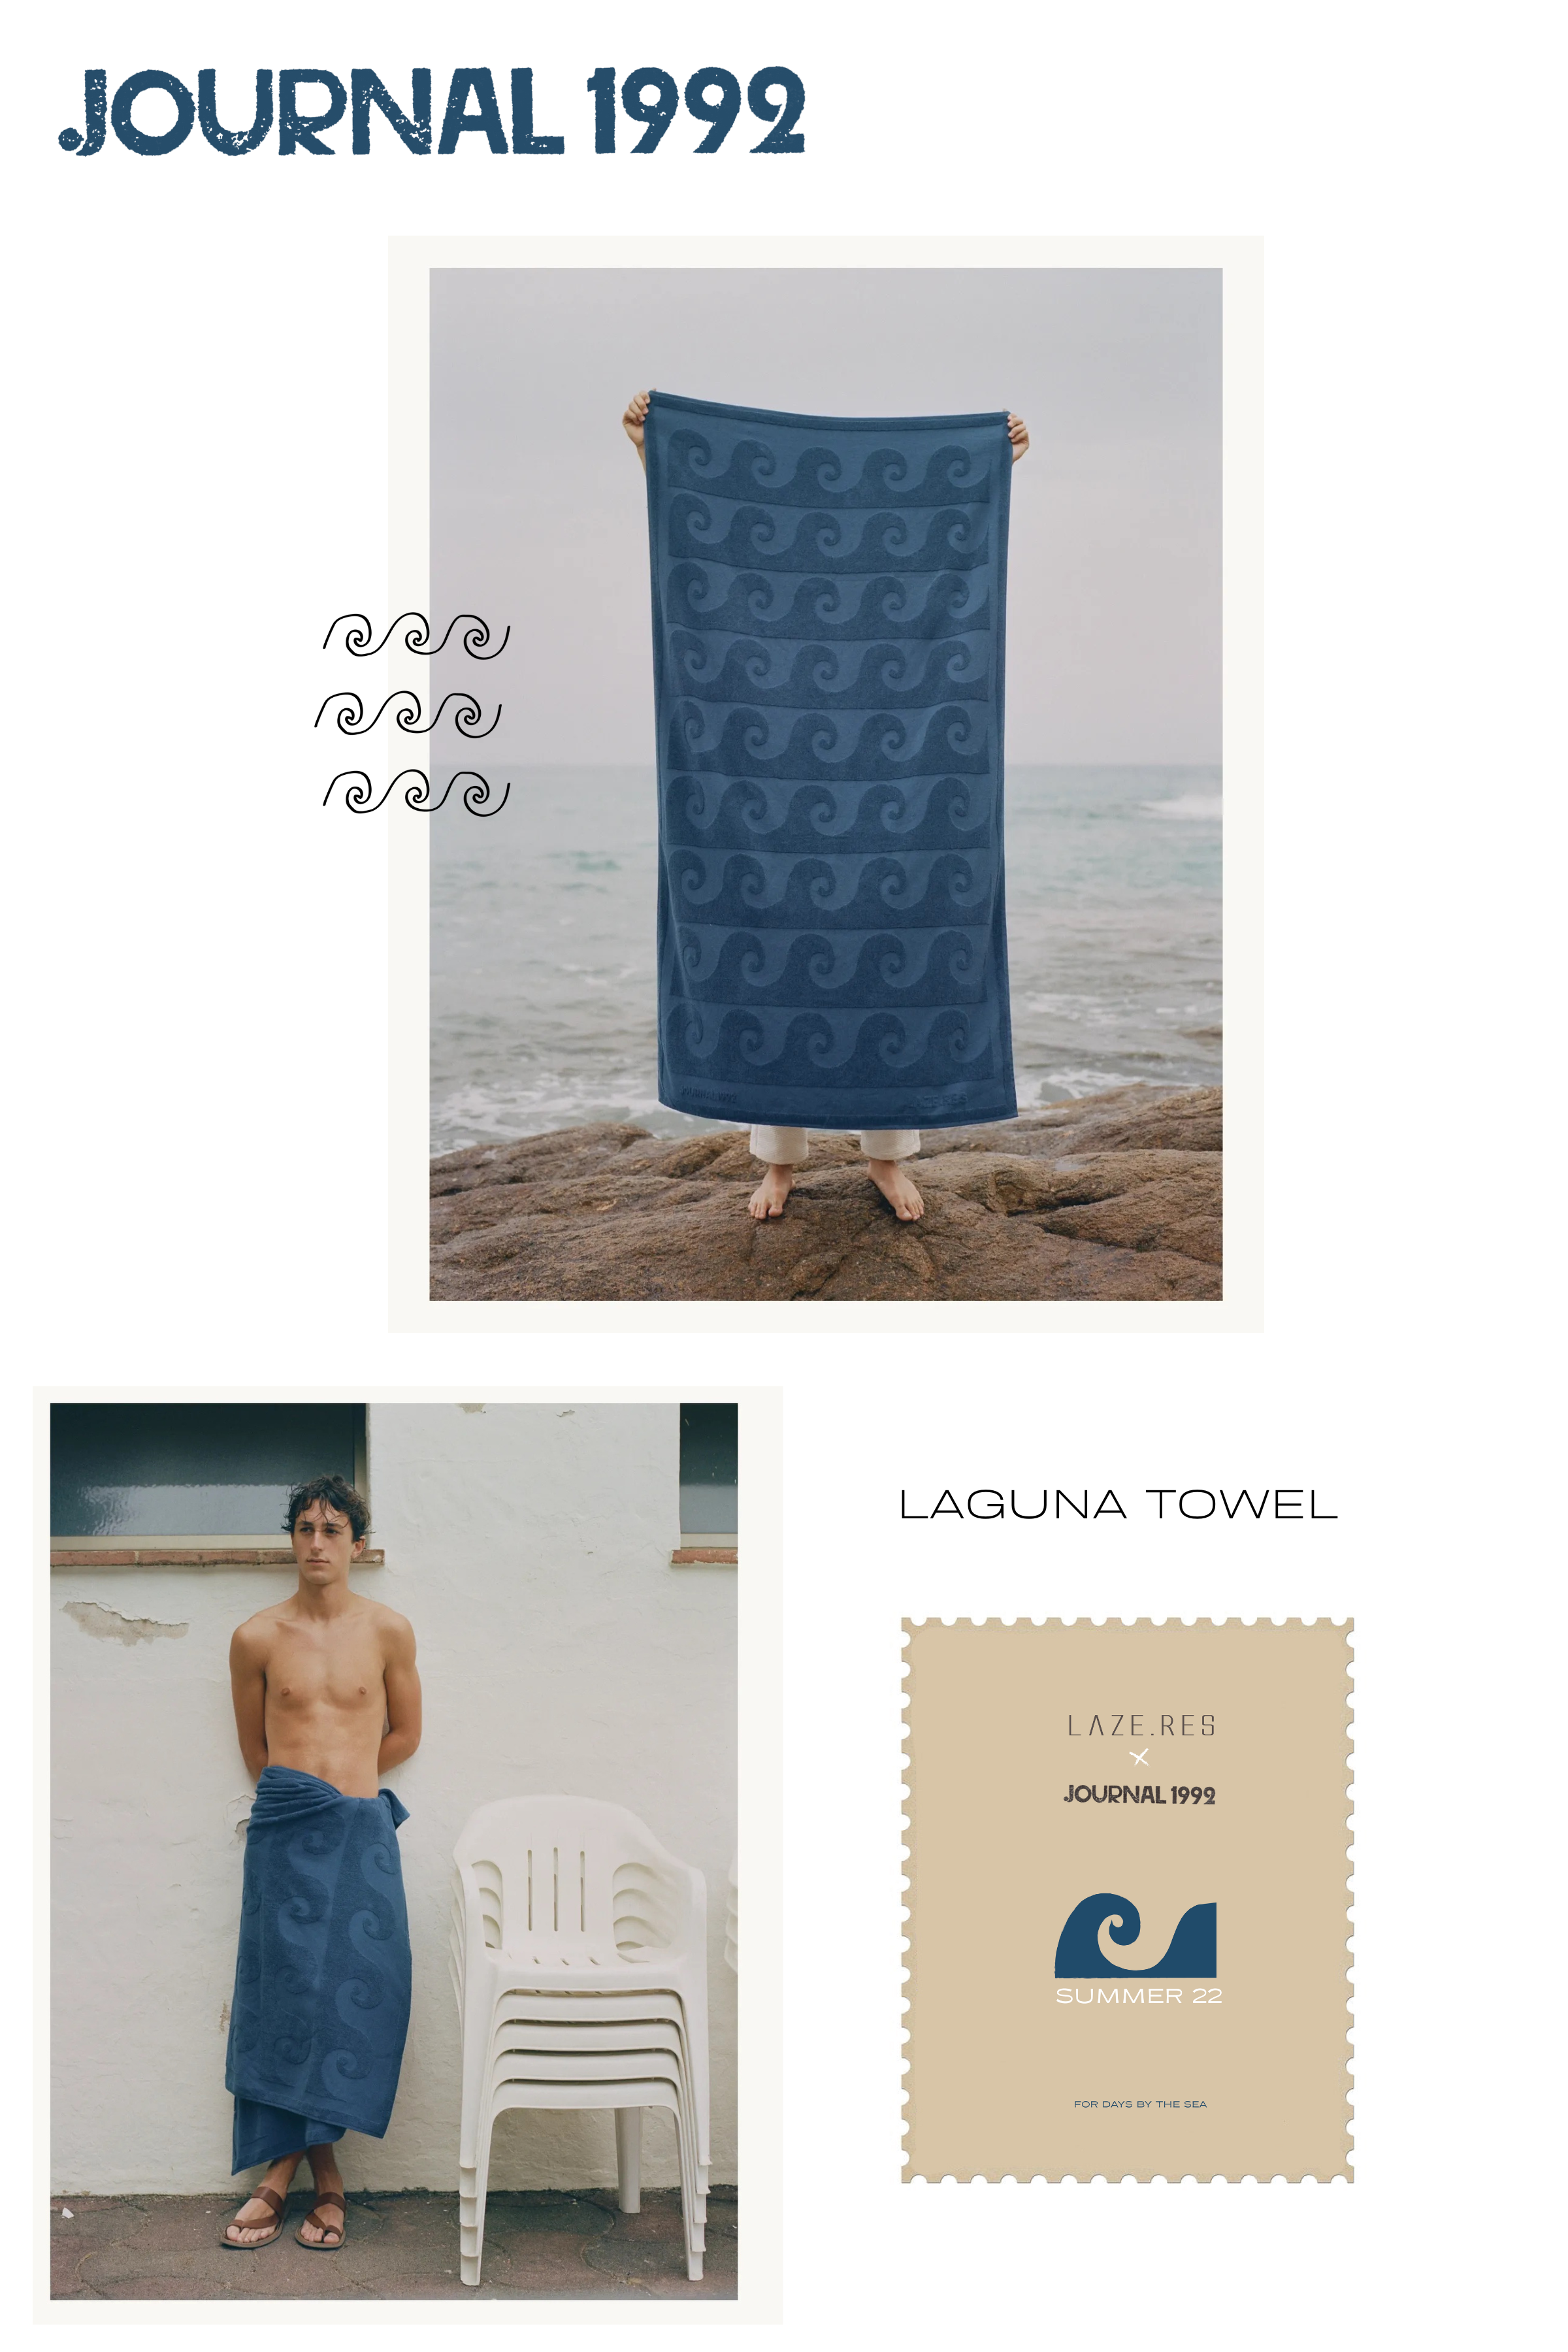 JOURNAL 1992 LAZE RES TOWELLING BEACH TOWEL LUXURY 